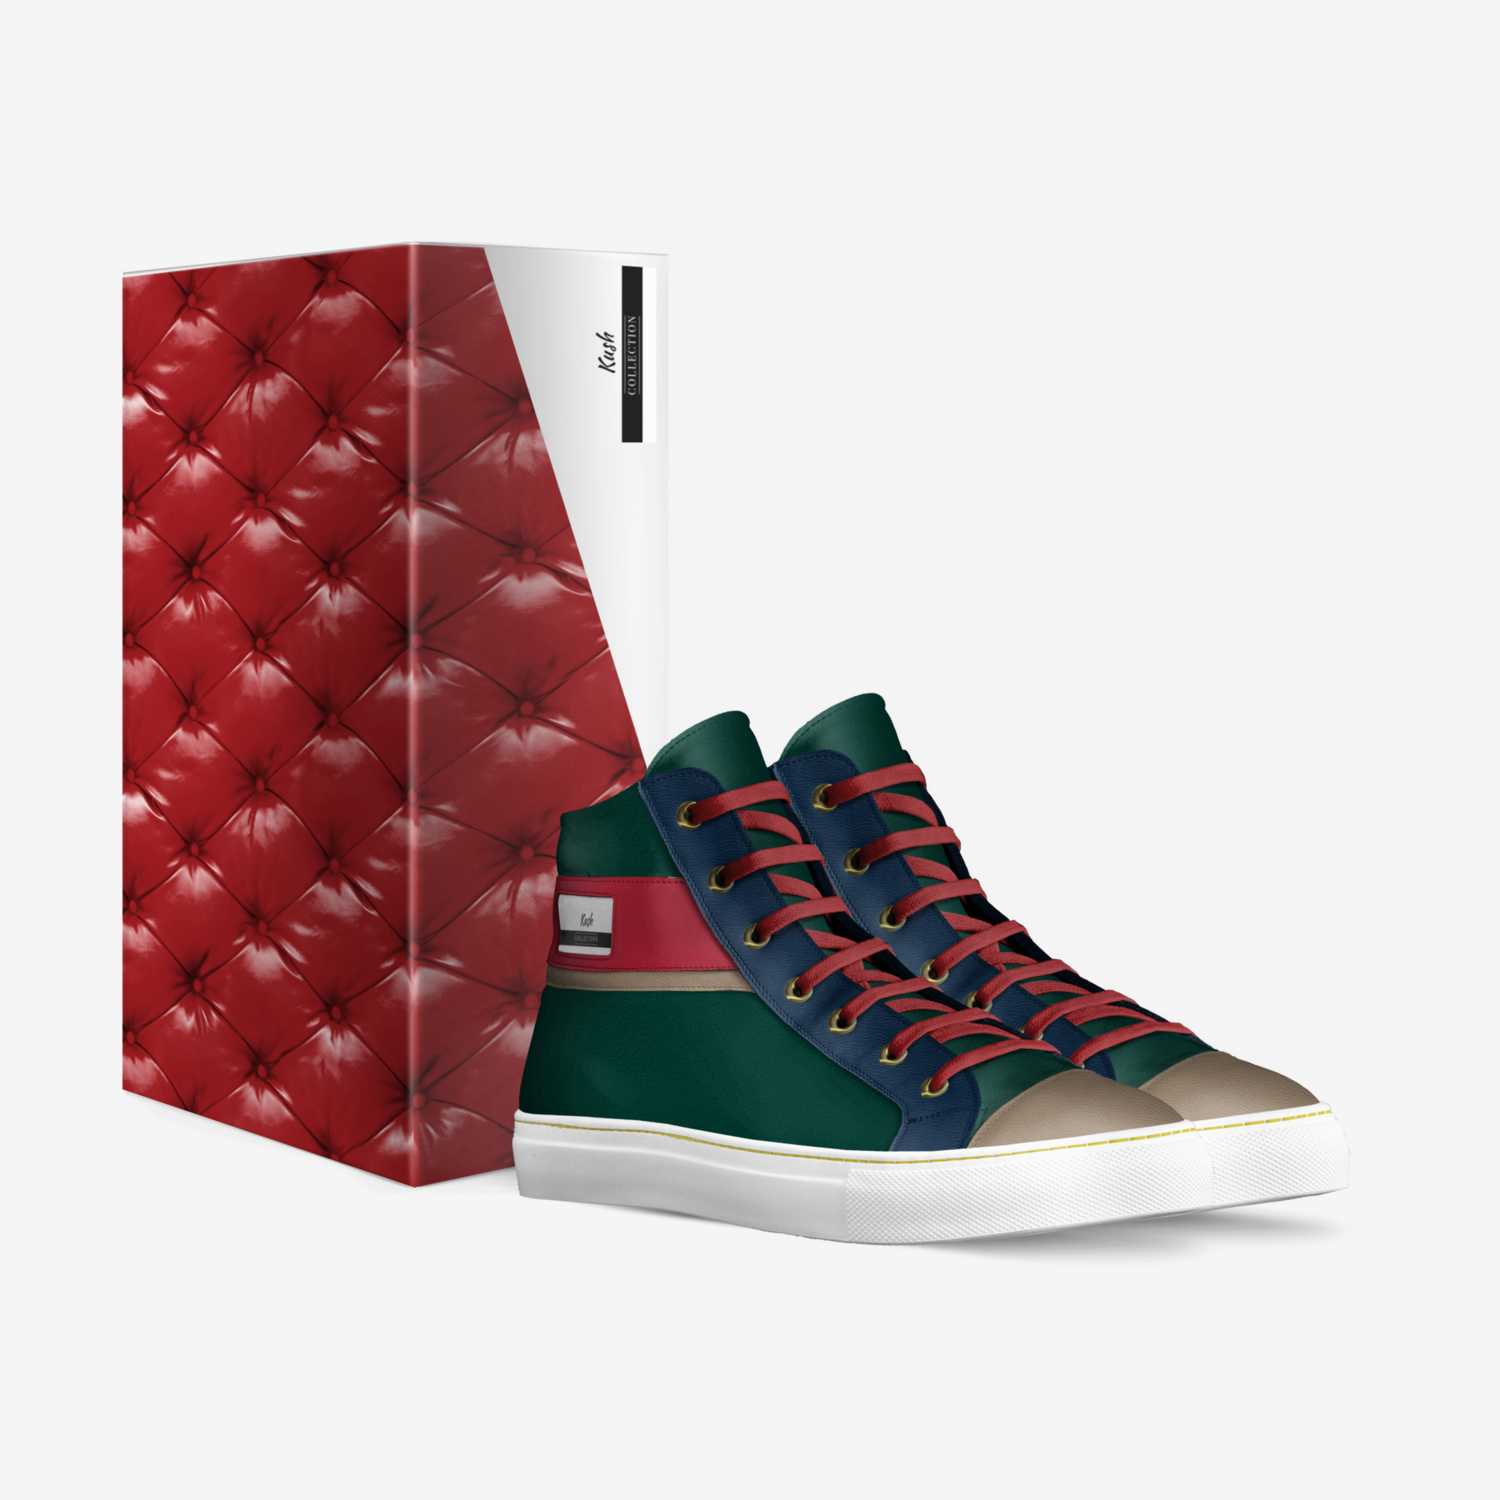 Kush custom made in Italy shoes by Eli Sandifer | Box view